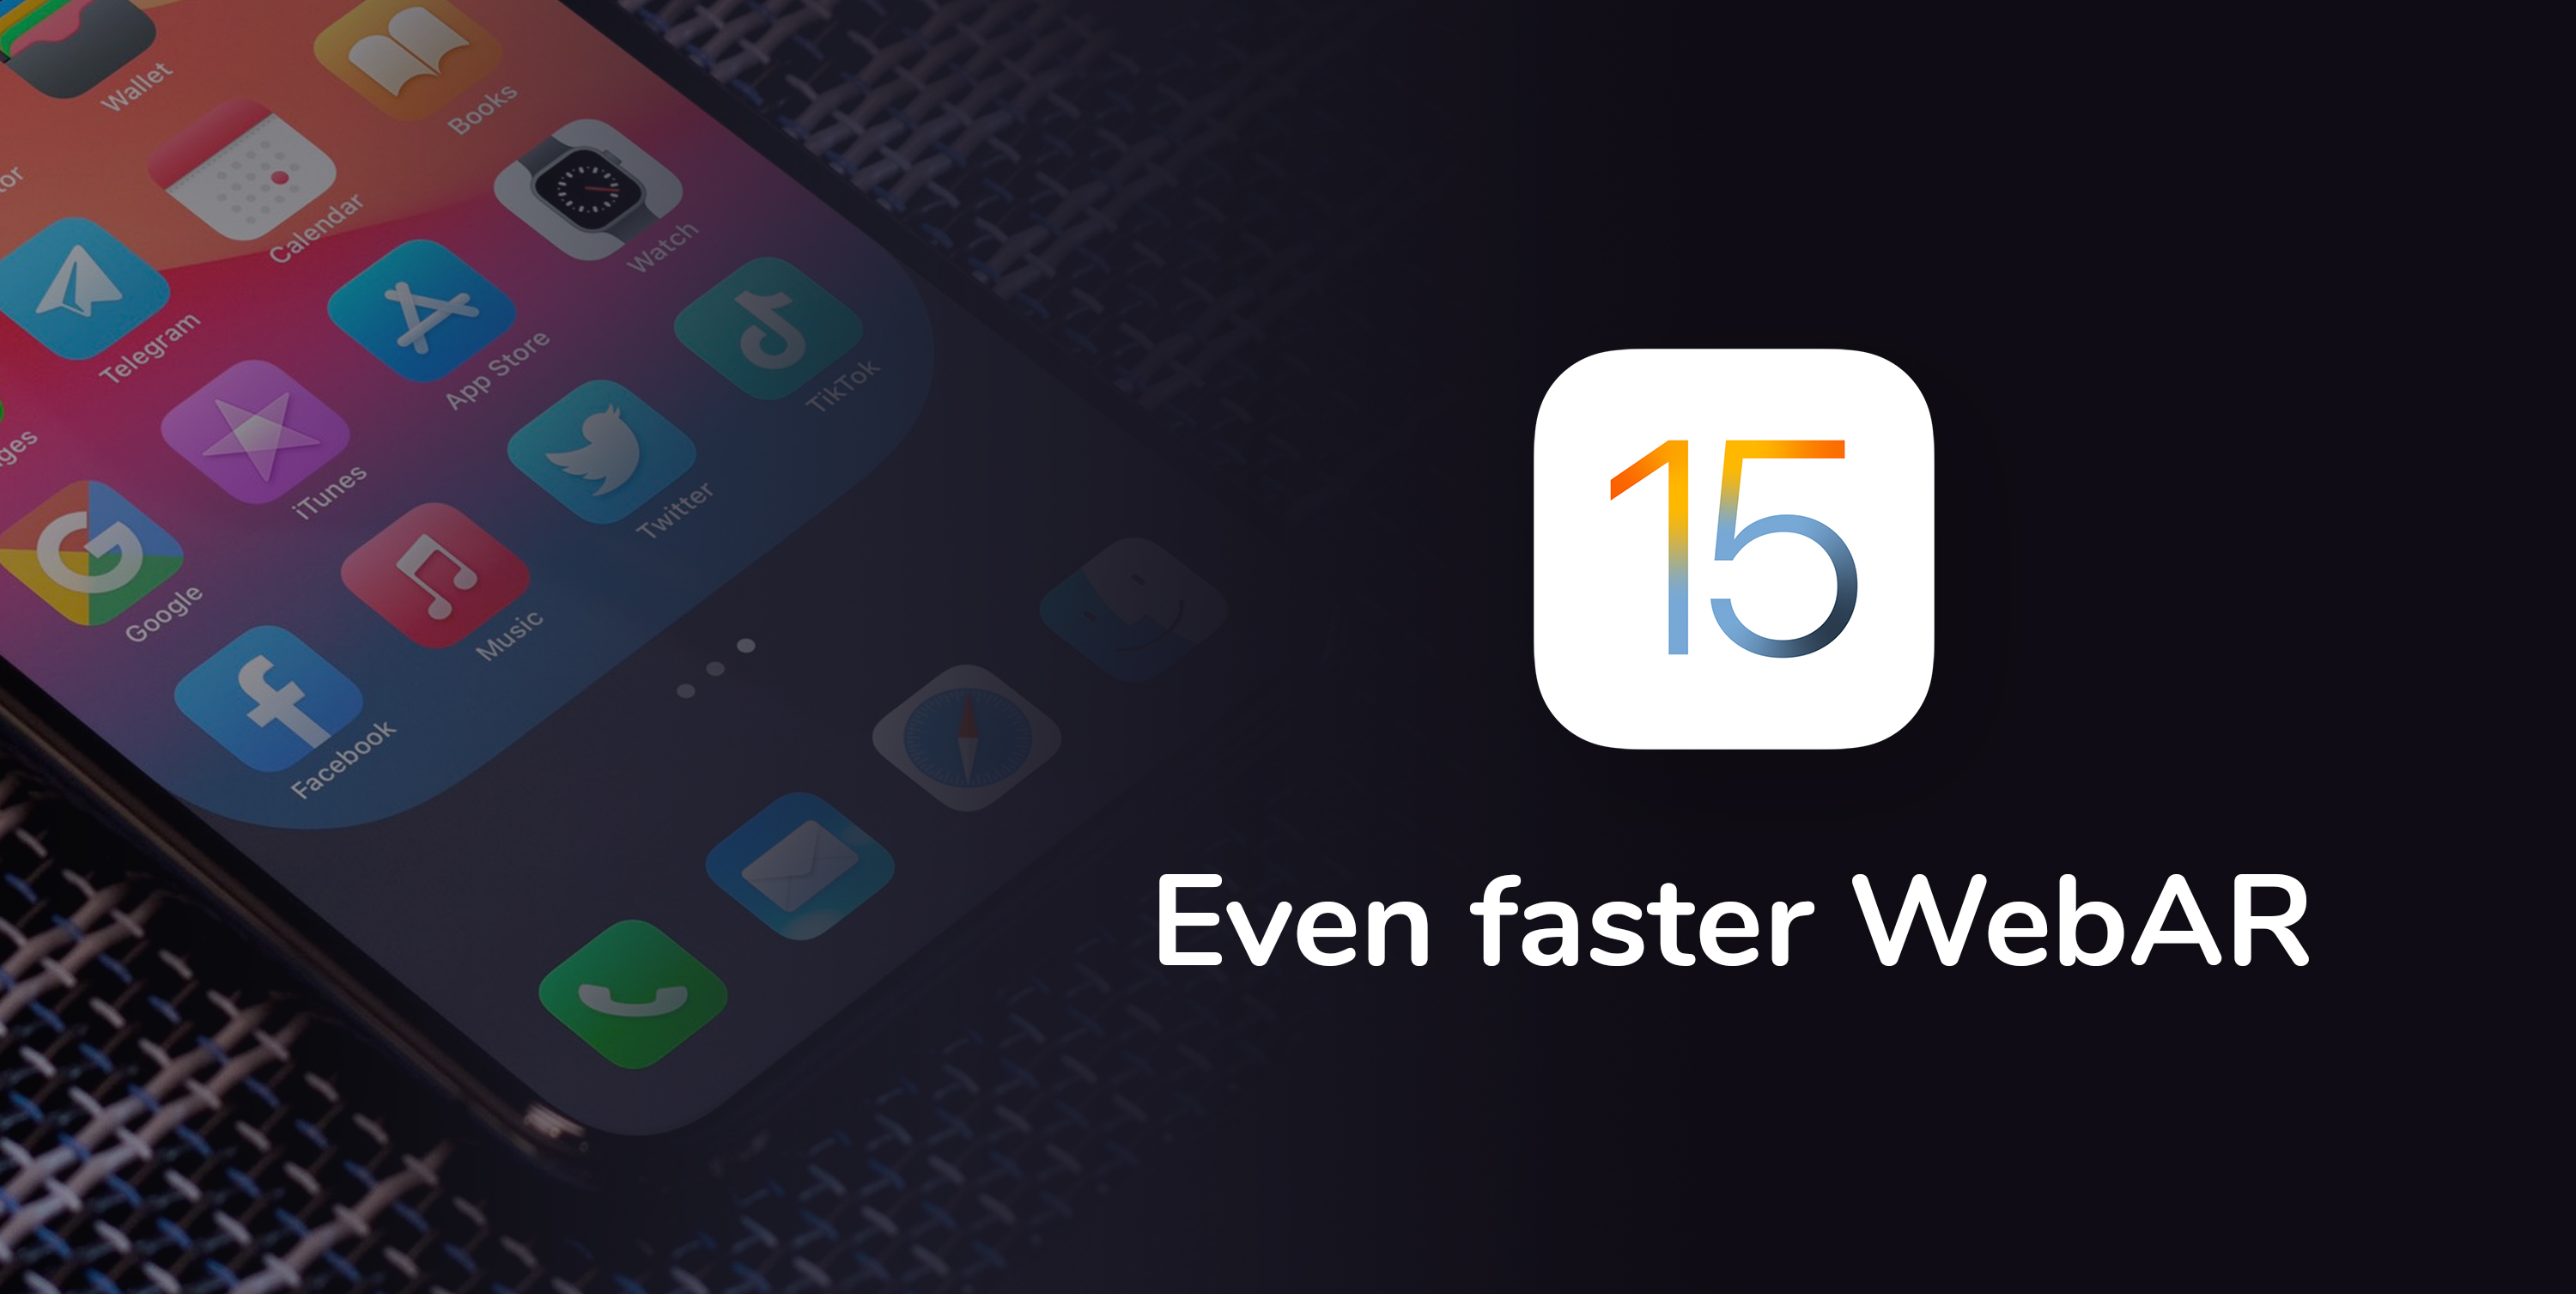 iOS 15 makes iPhone an even more powerful WebAR machine